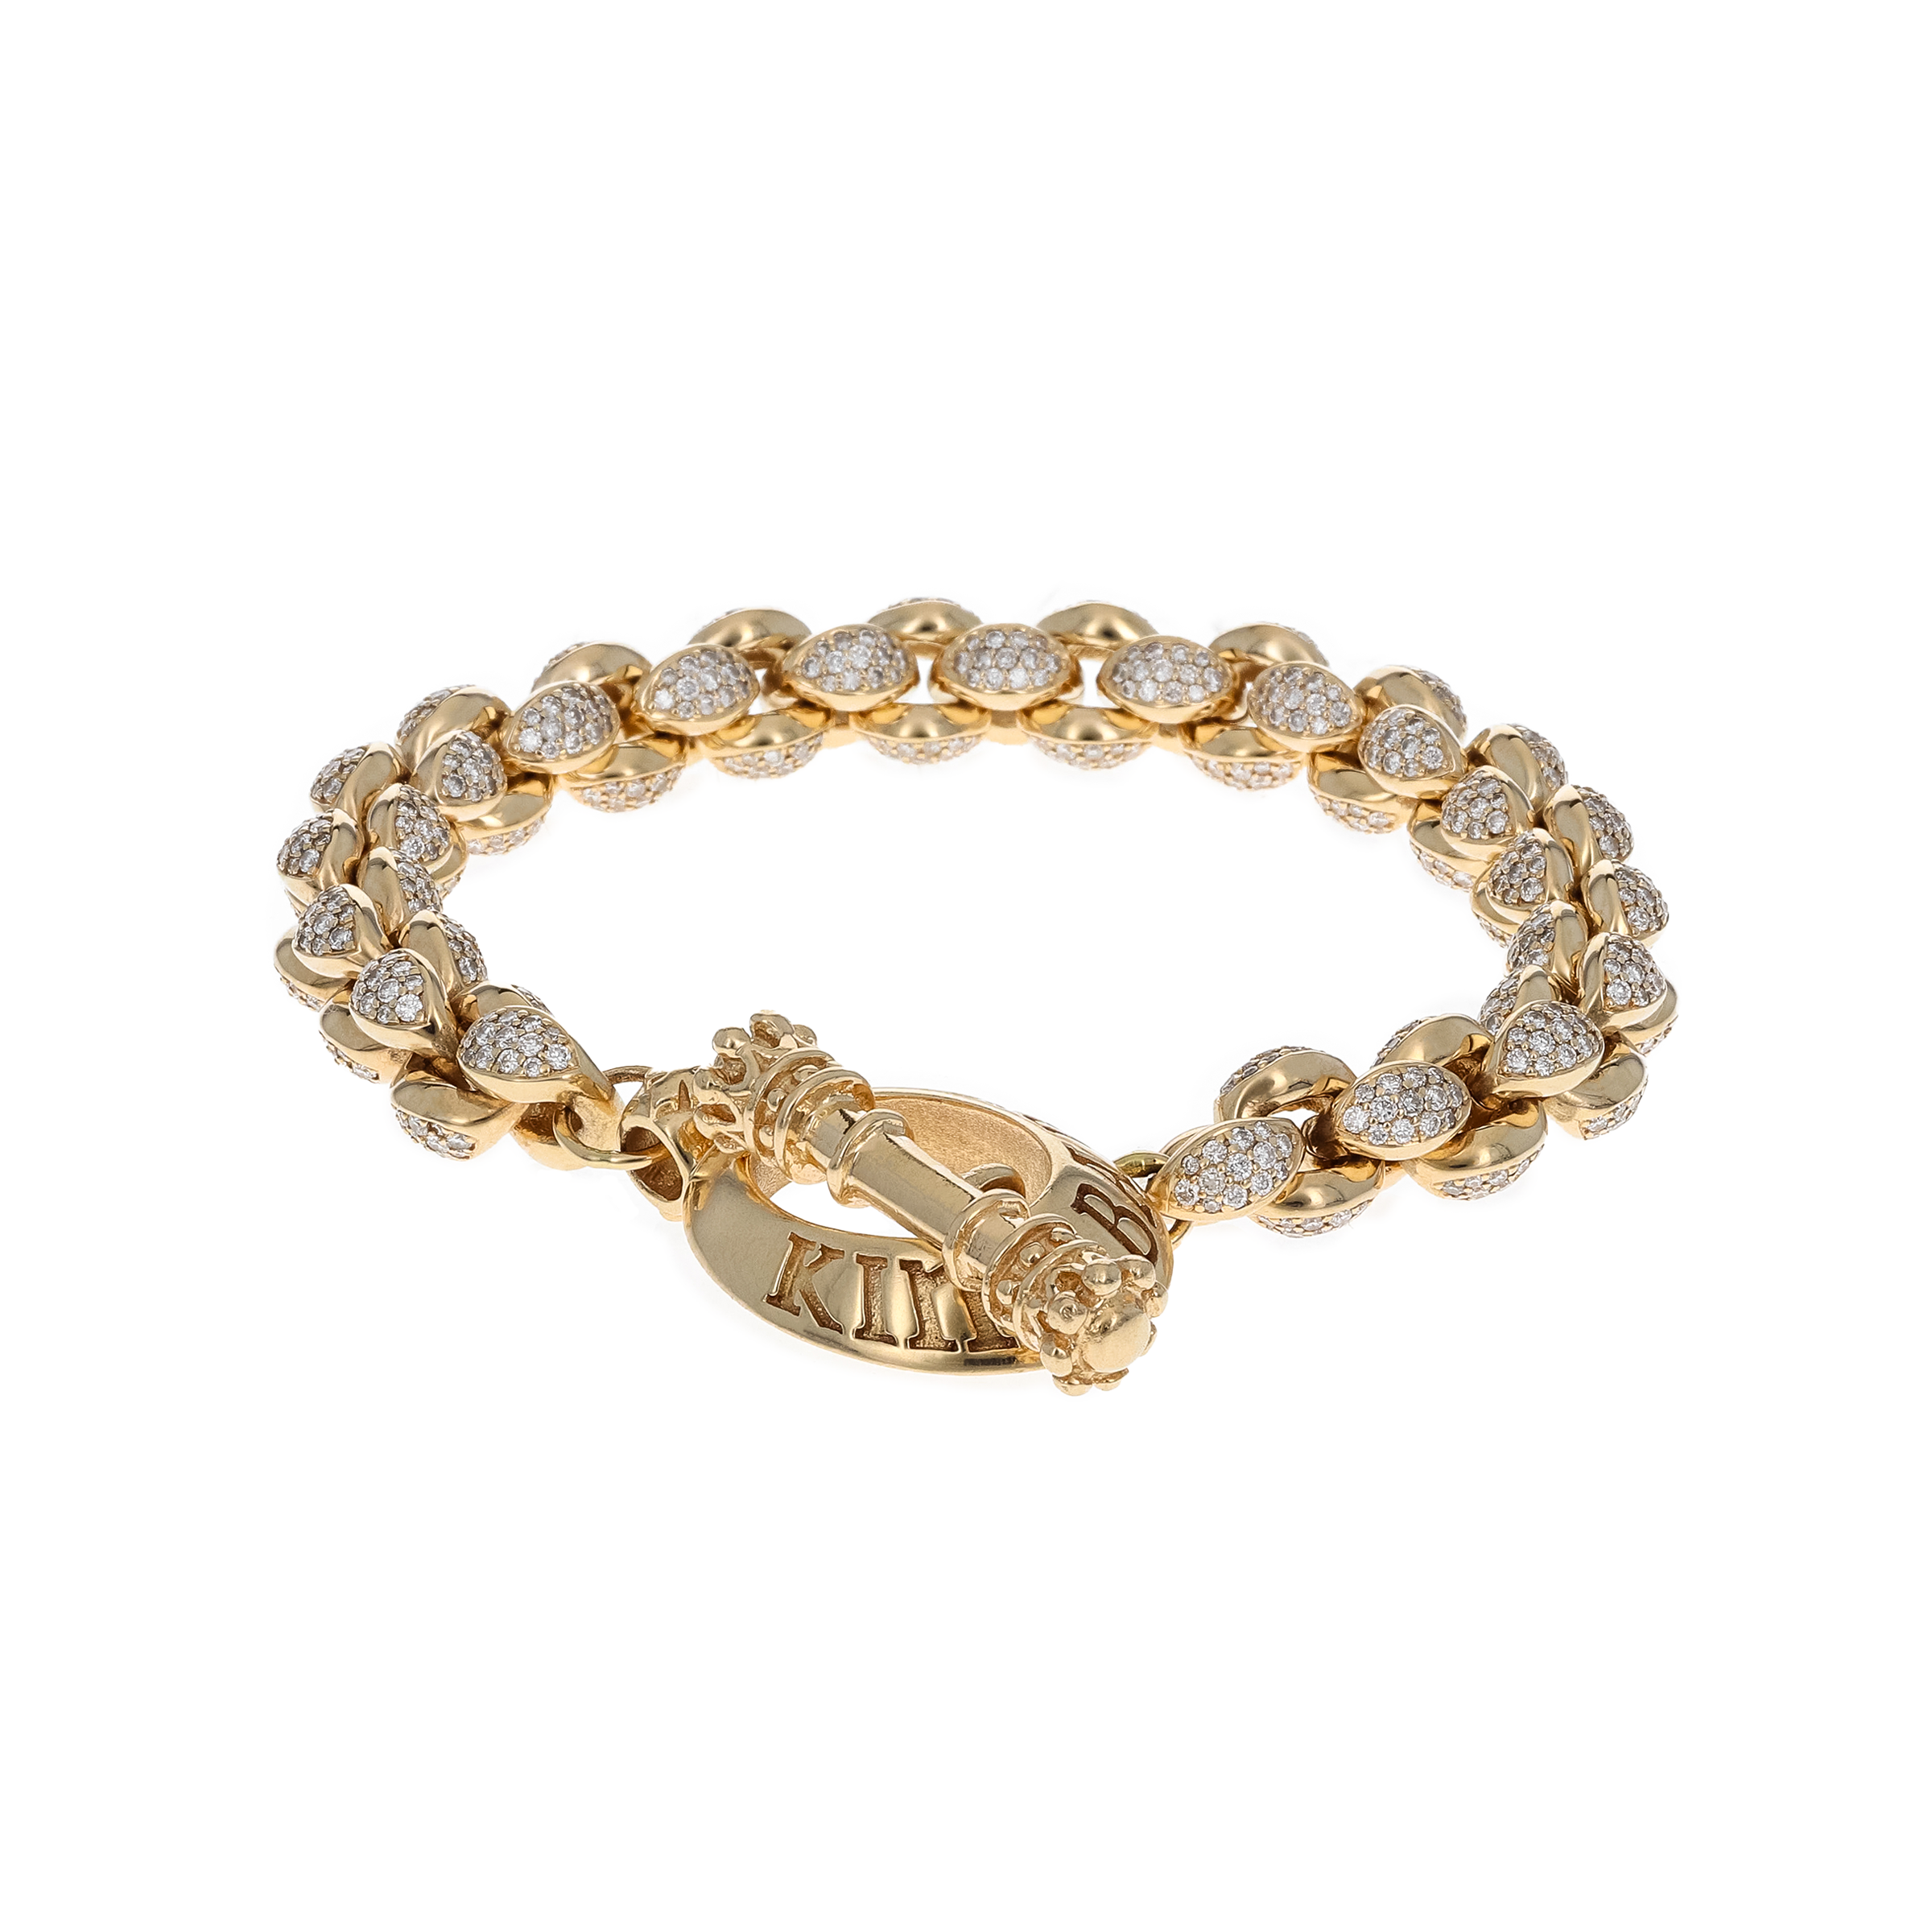 Product shot of 10k Gold Large Infinity Link Bracelet w/ Pave Diamonds on white background